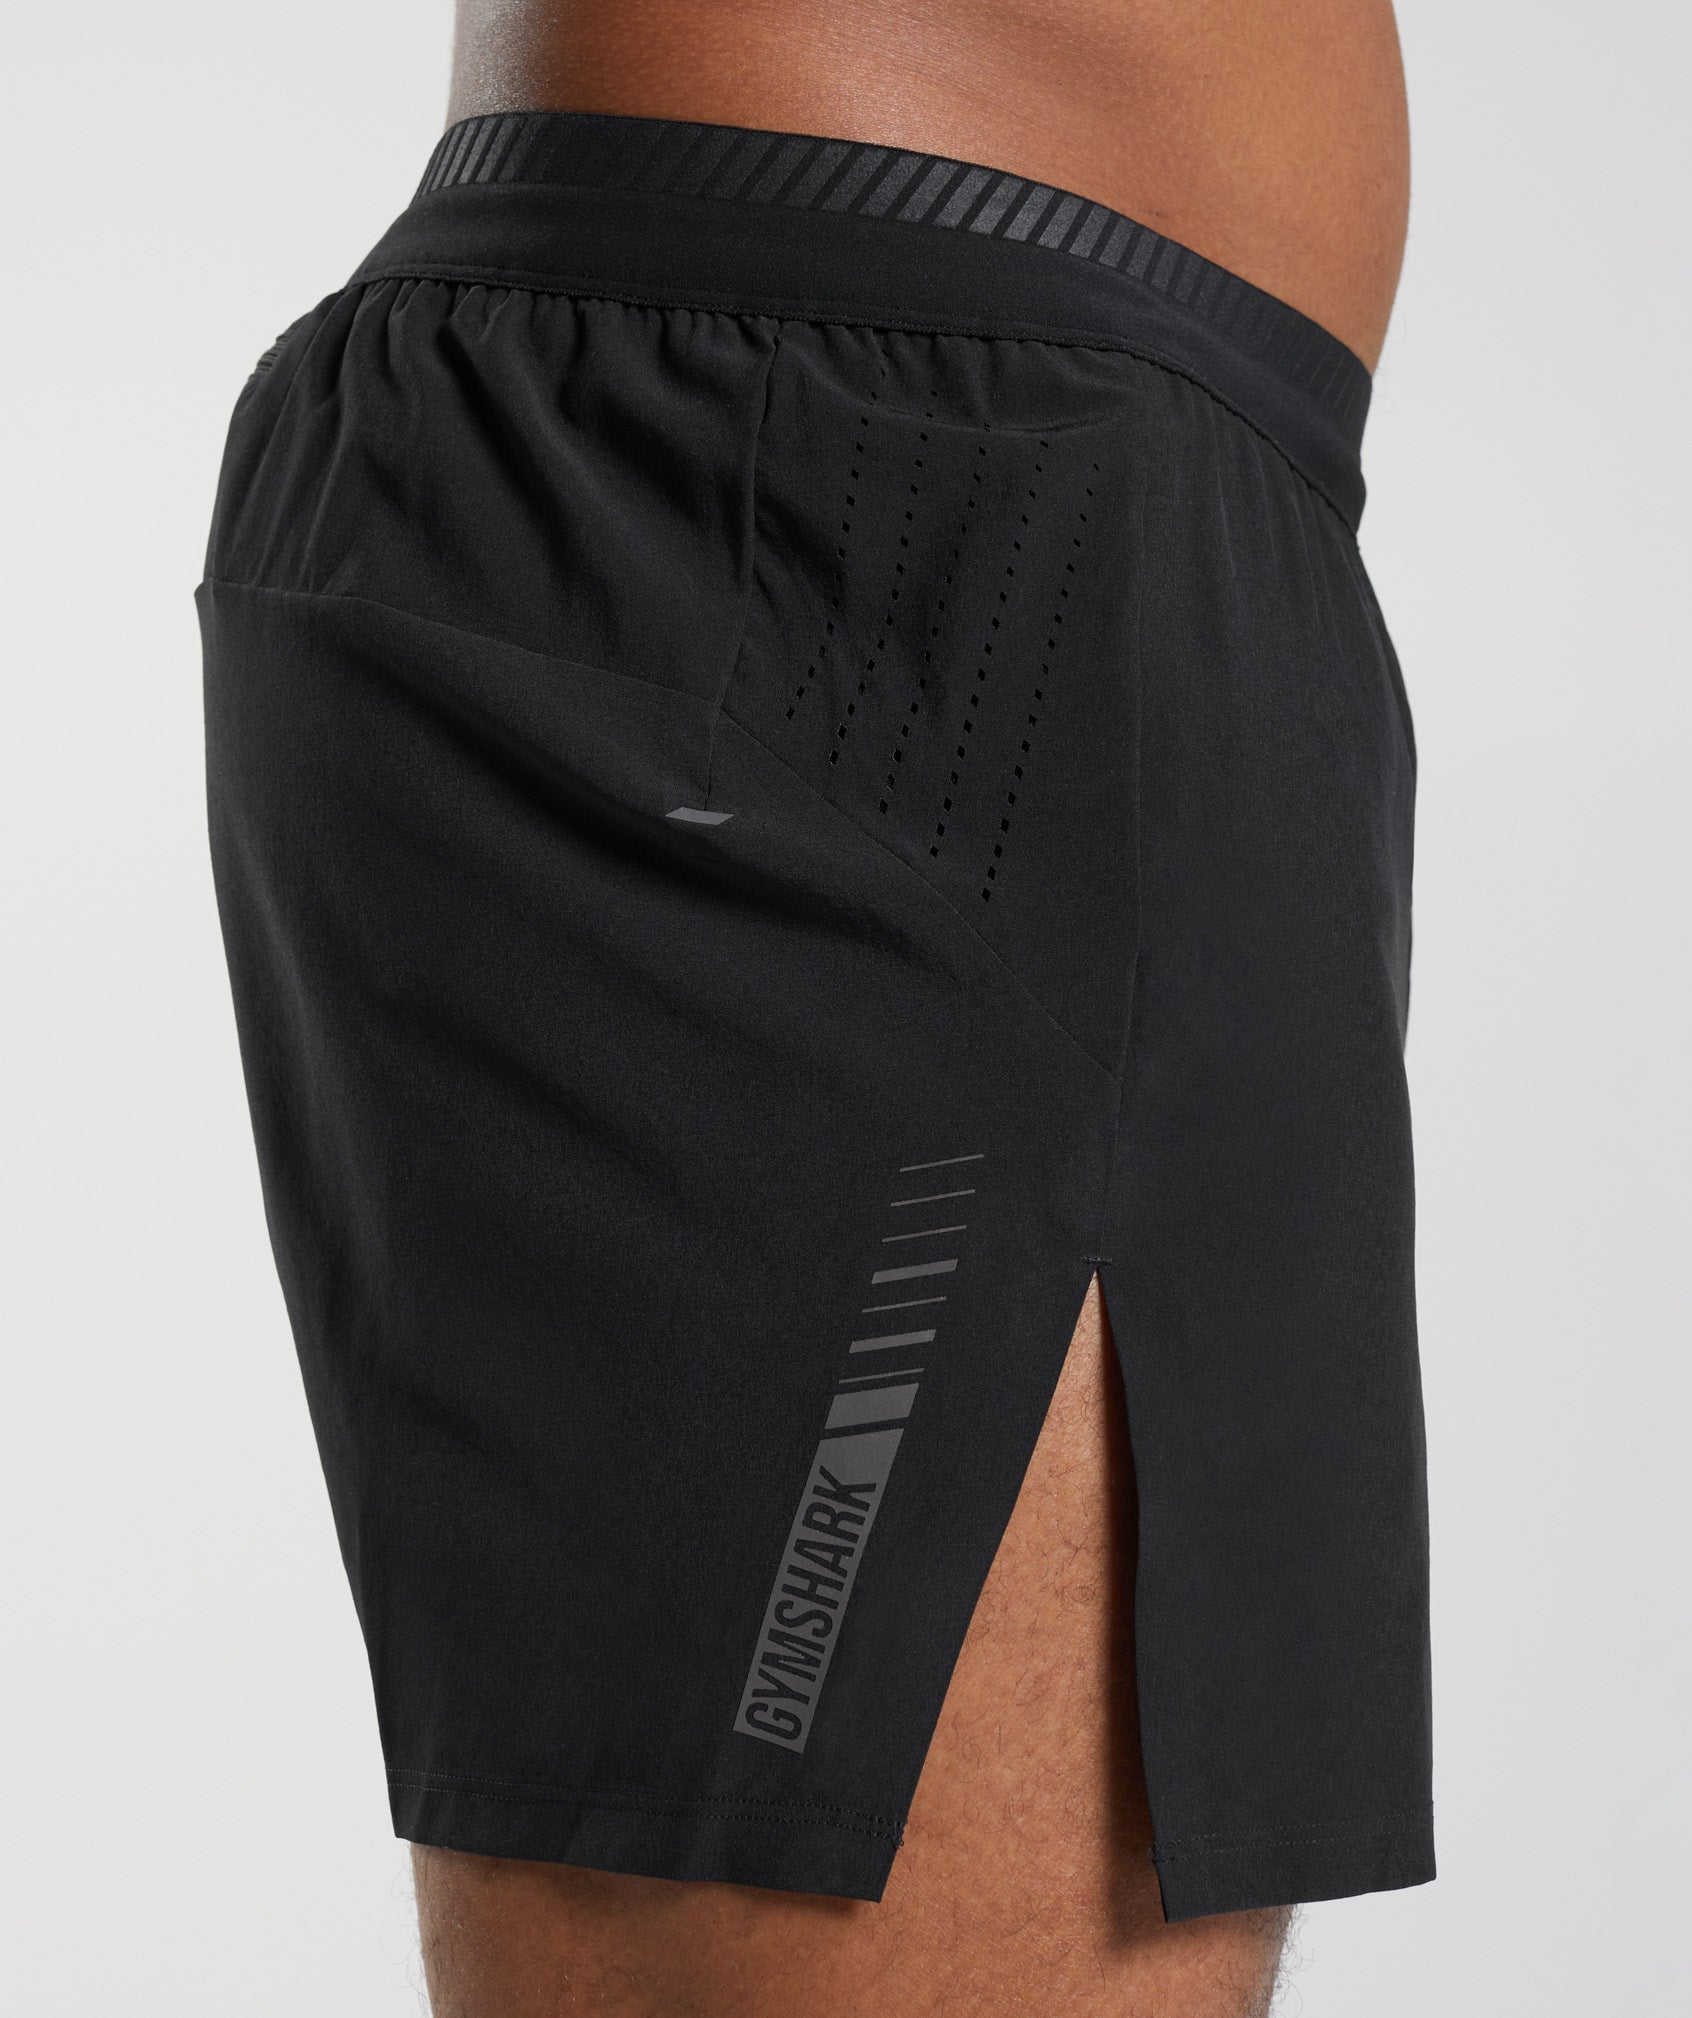 Apex Run 4" Shorts in Black - view 7